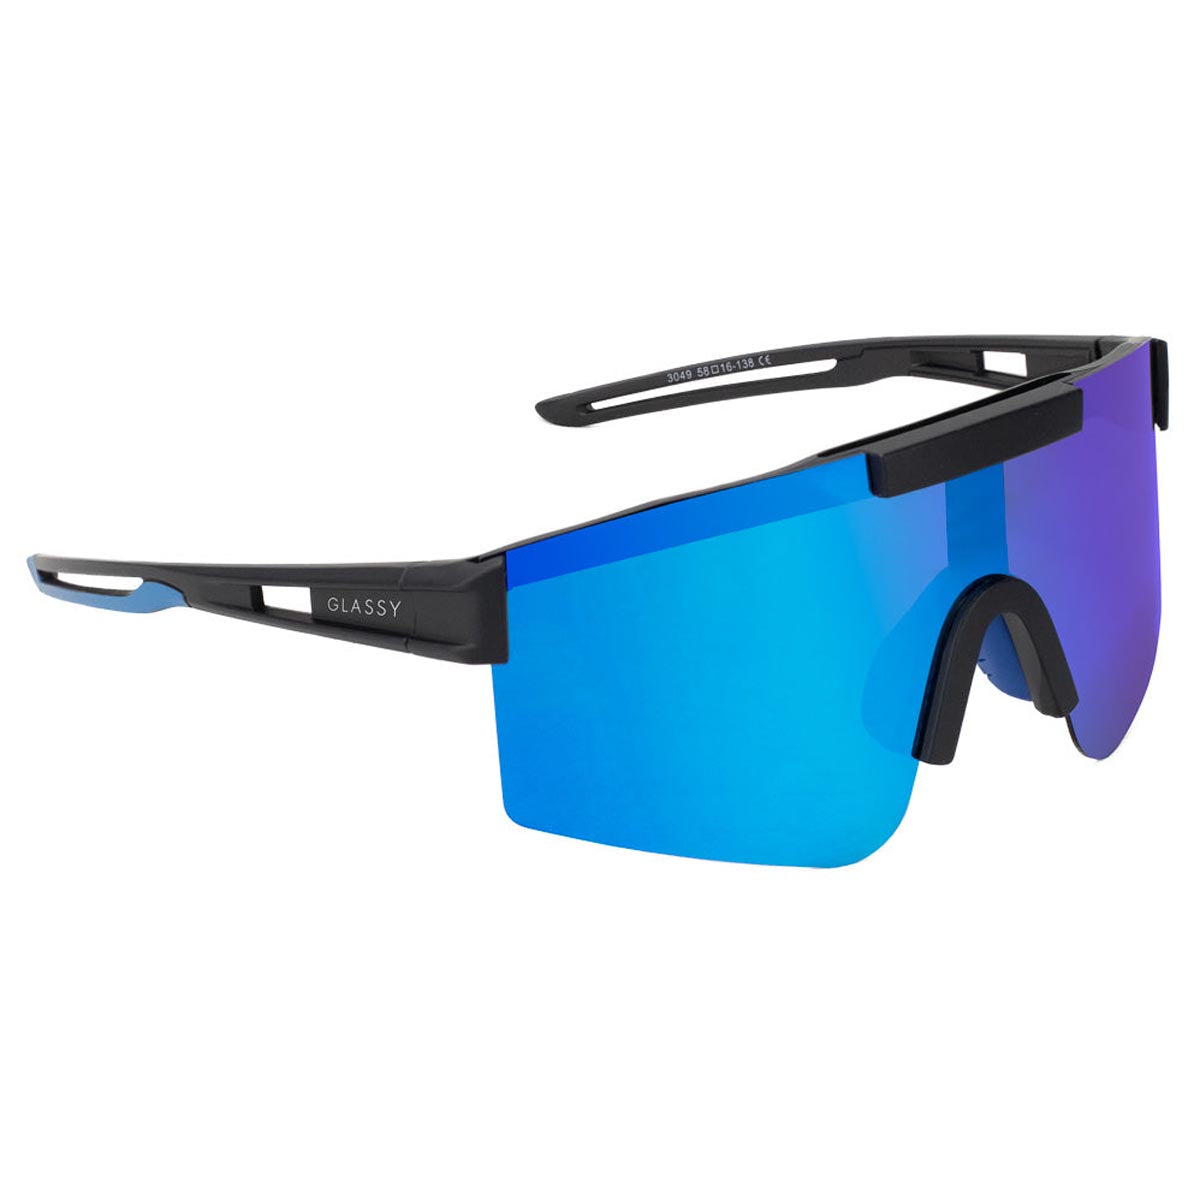 Glassy Salt Plus Polarized Sunglasses - Black/Blue Mirror image 1